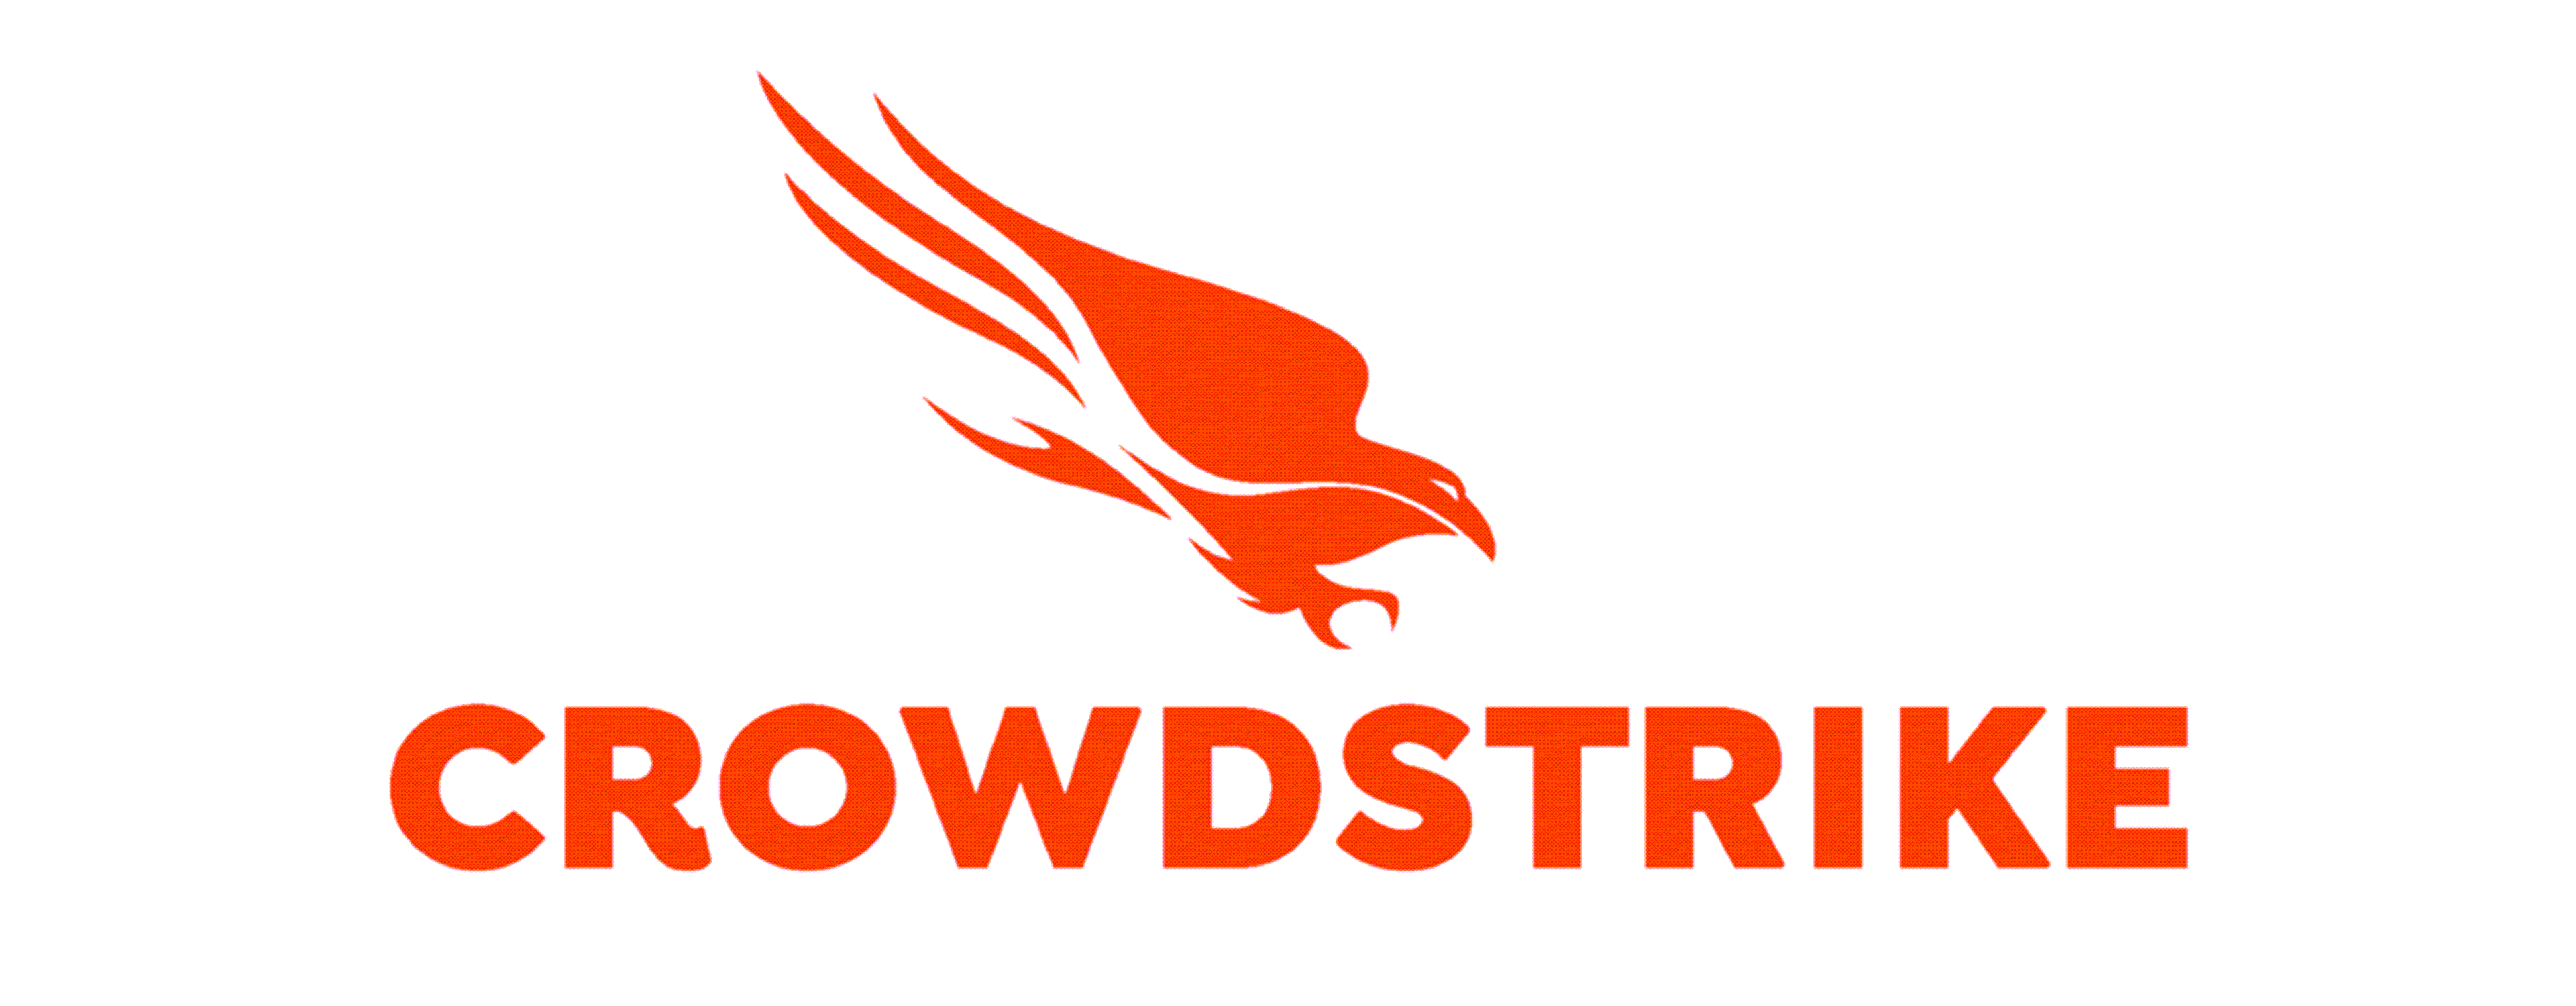             Logo CrowdStrike        